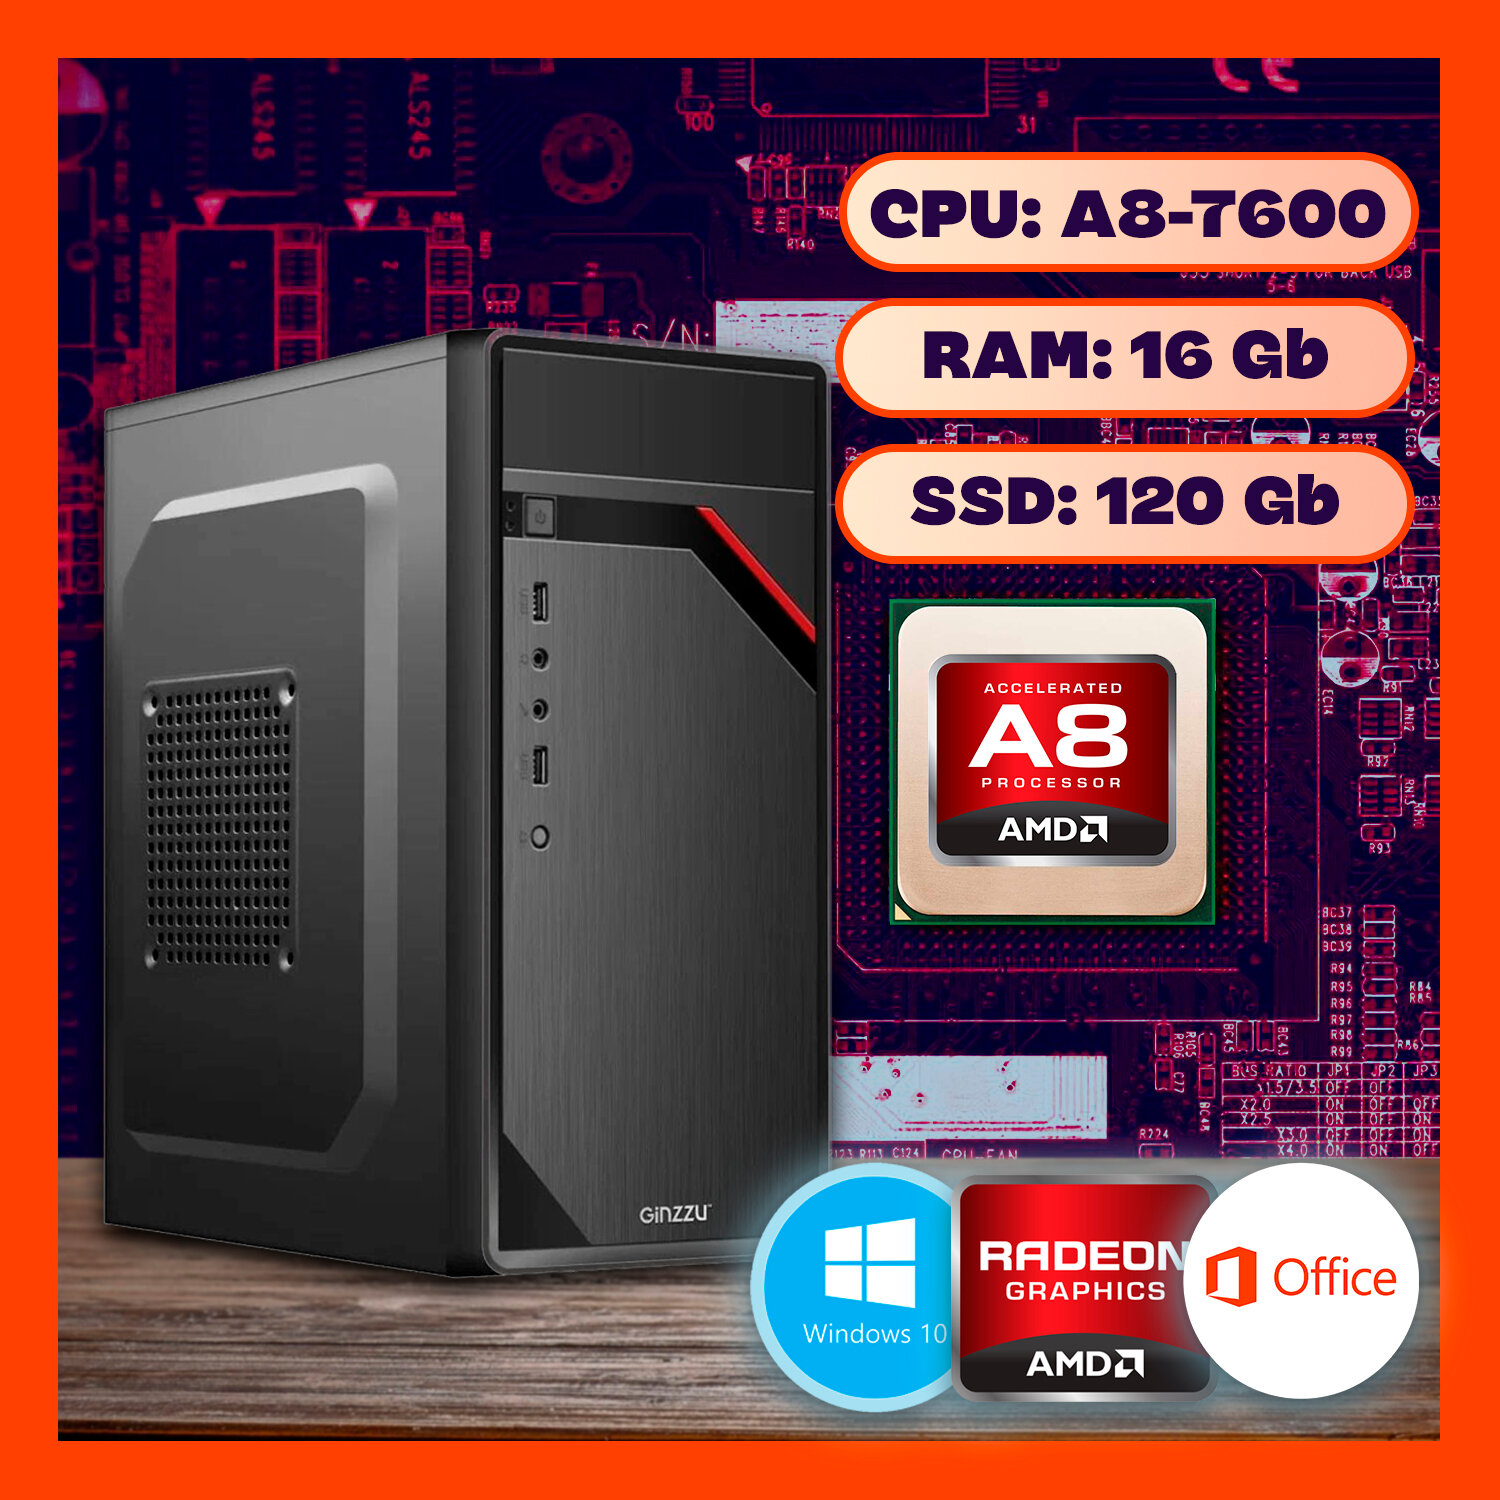 Системный блок AMD A8-7600, 3,1 ГГц, RAM 16 Gb, SSD 120 Gb, AMD Radeon R7, Windows 10Pro